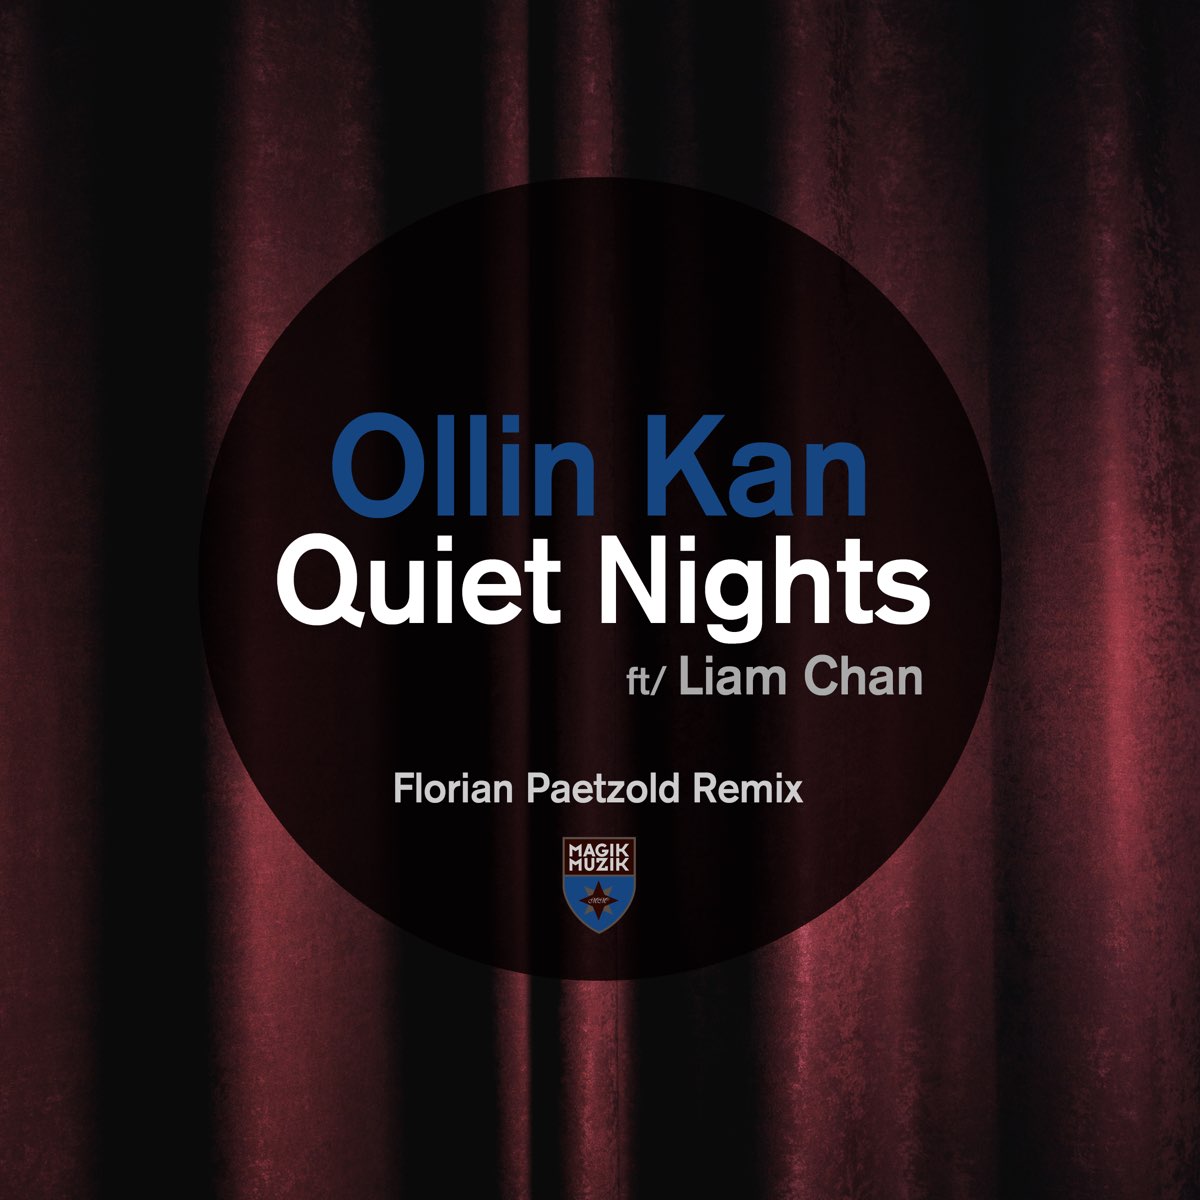 Quite night. Florian Paetzold. Quiet Night. Florian Paetzold - Edge of tomorrow (Original Mix).